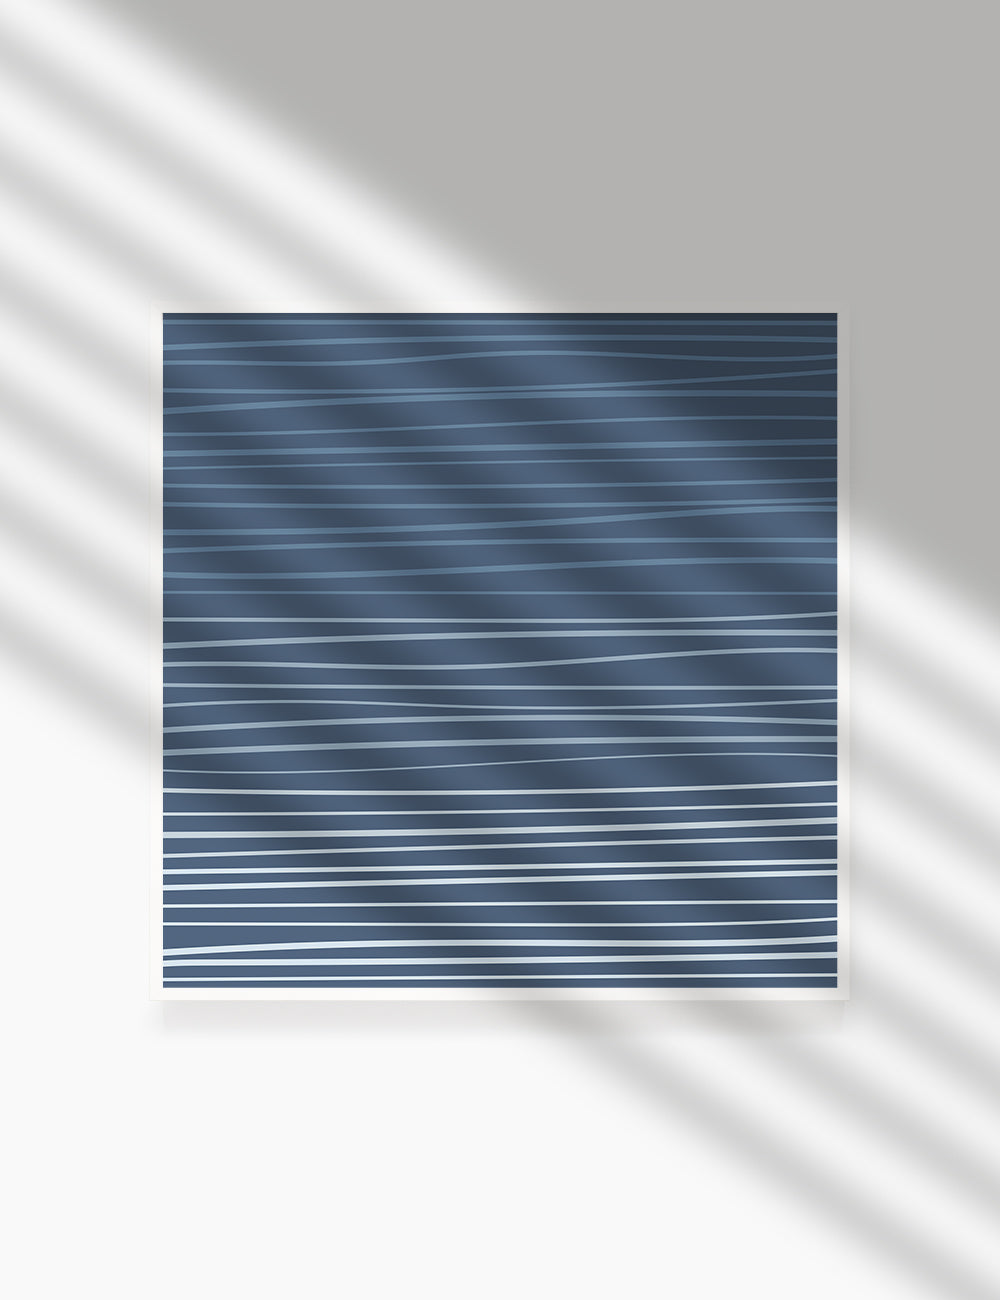 WAVY LINES. BLUE. Minimalist. Abstract. Boho Art. Printable Wall Art Illustration. - PAPER MOON Art & Design